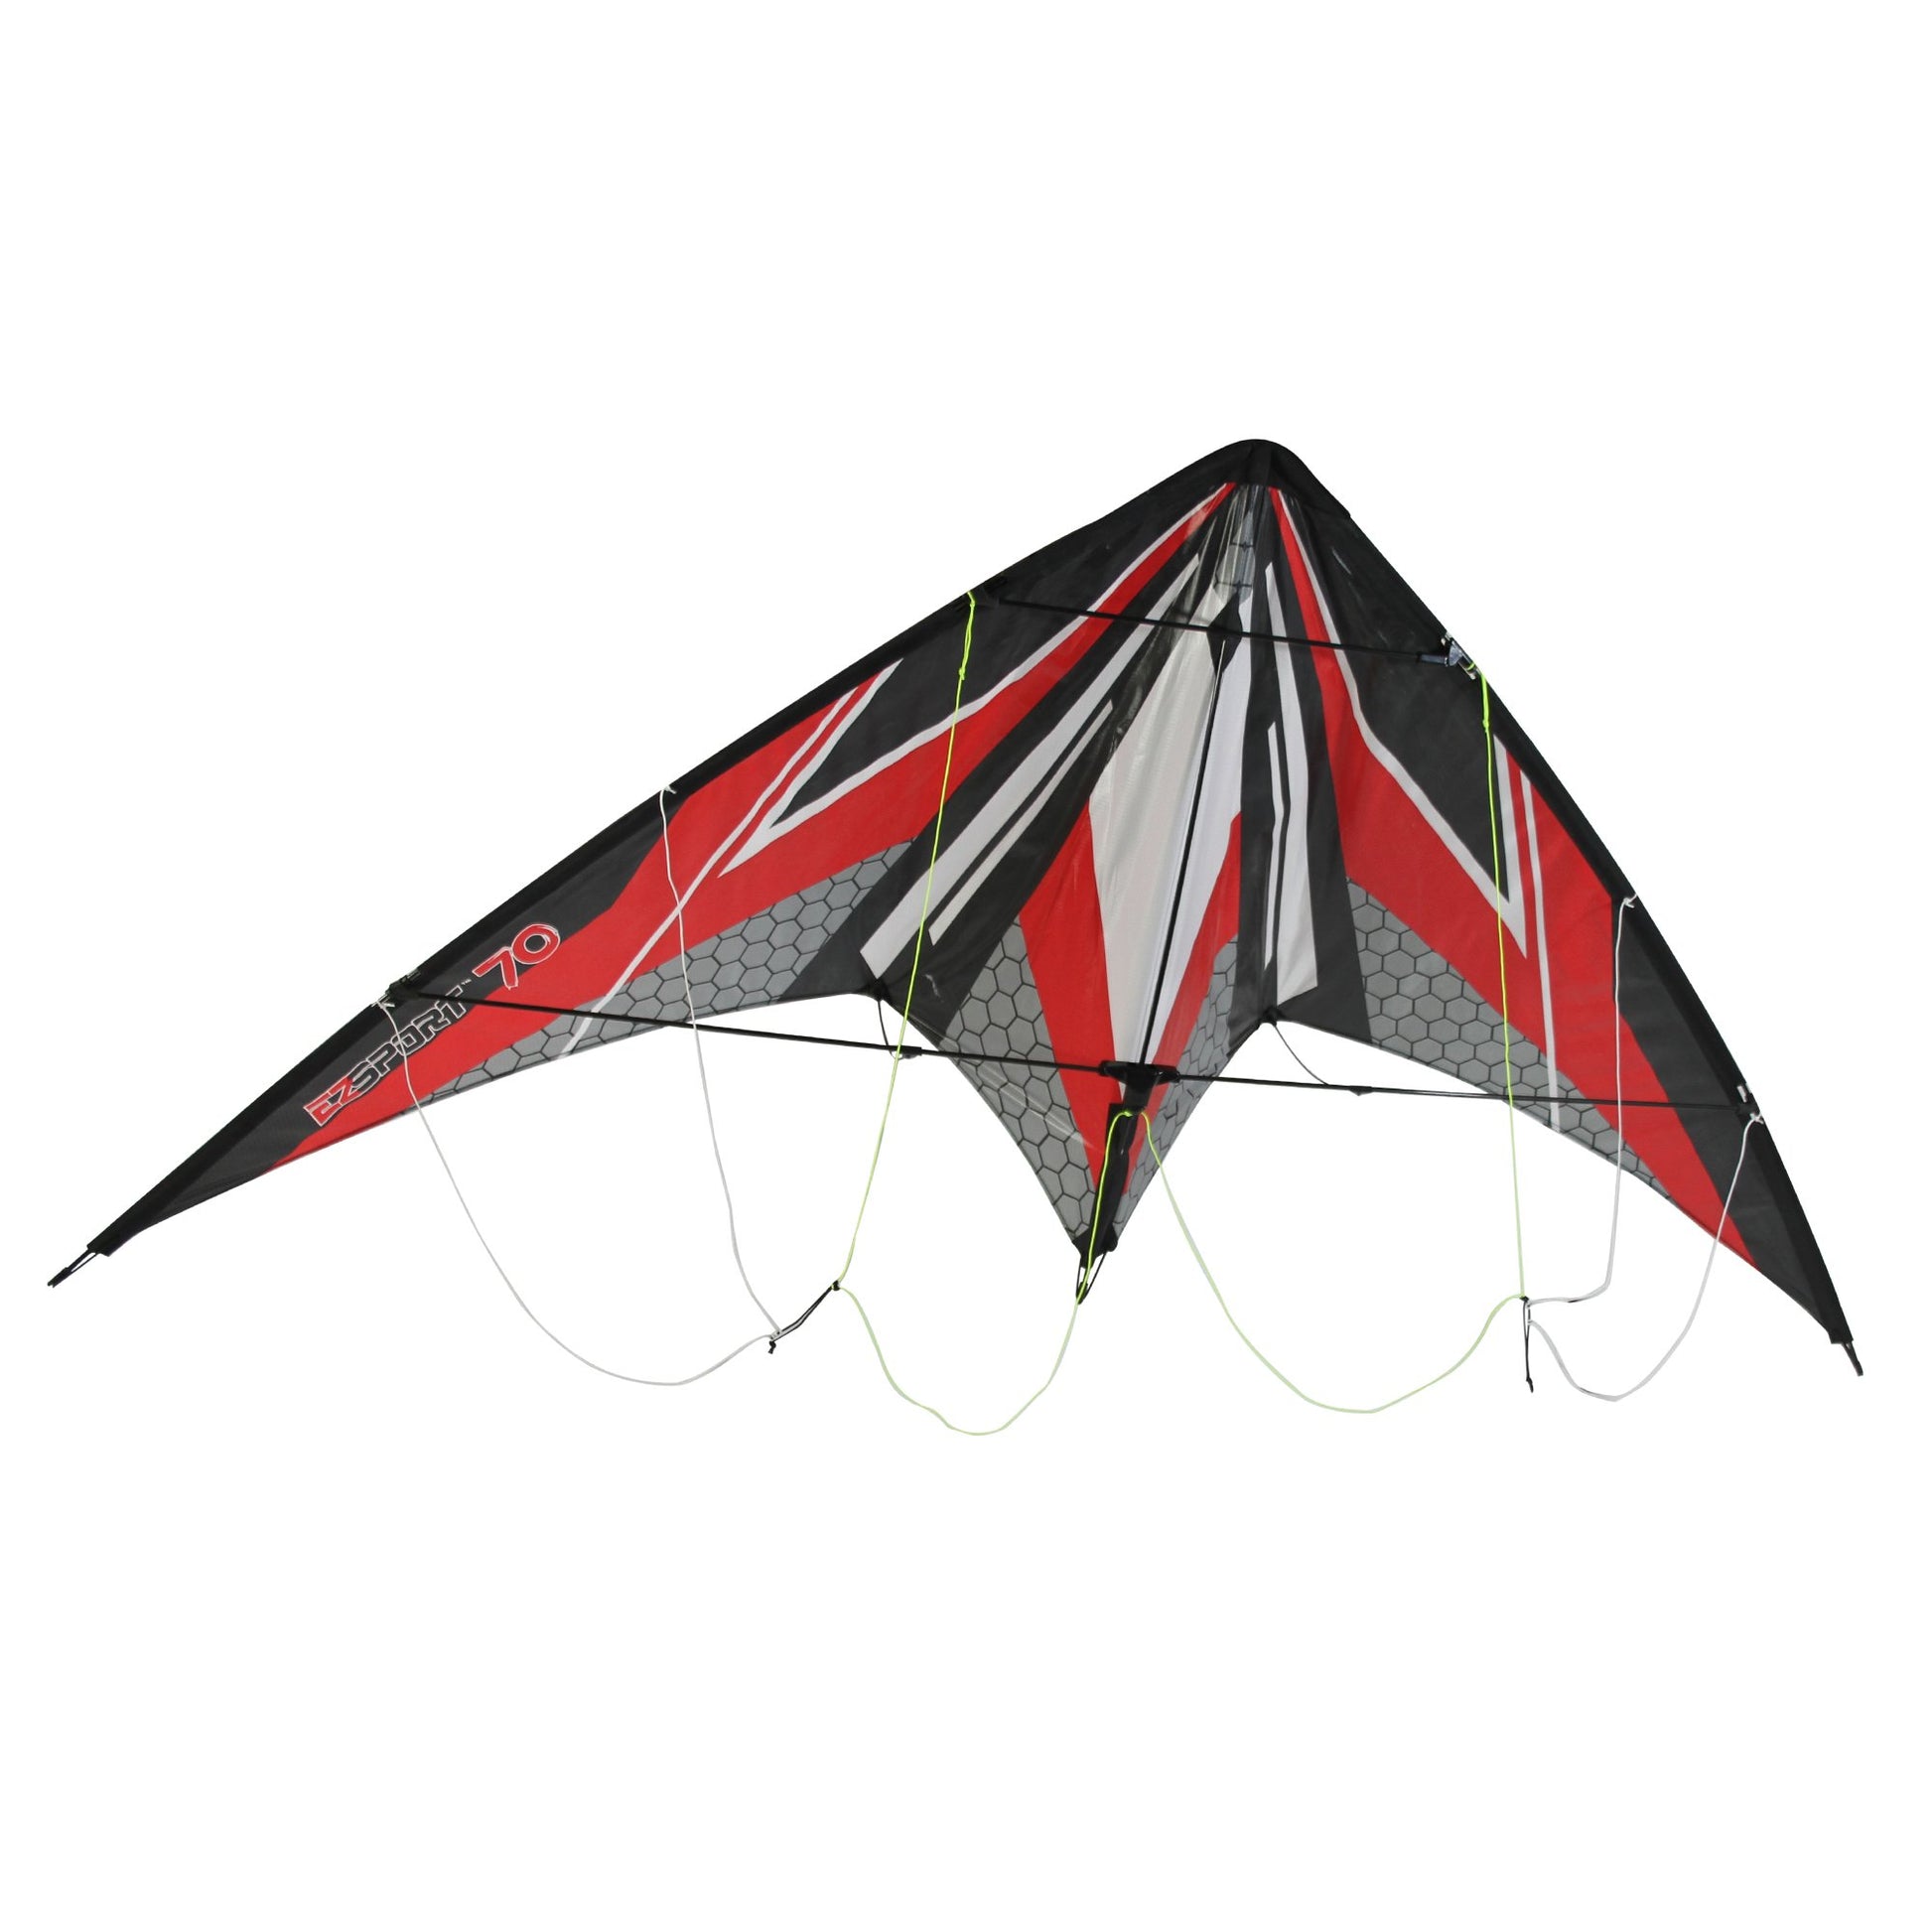 WindNSun EZ Sport 70 Dual Control Sport Kite Red Hexagon Nylon Kite Product Image